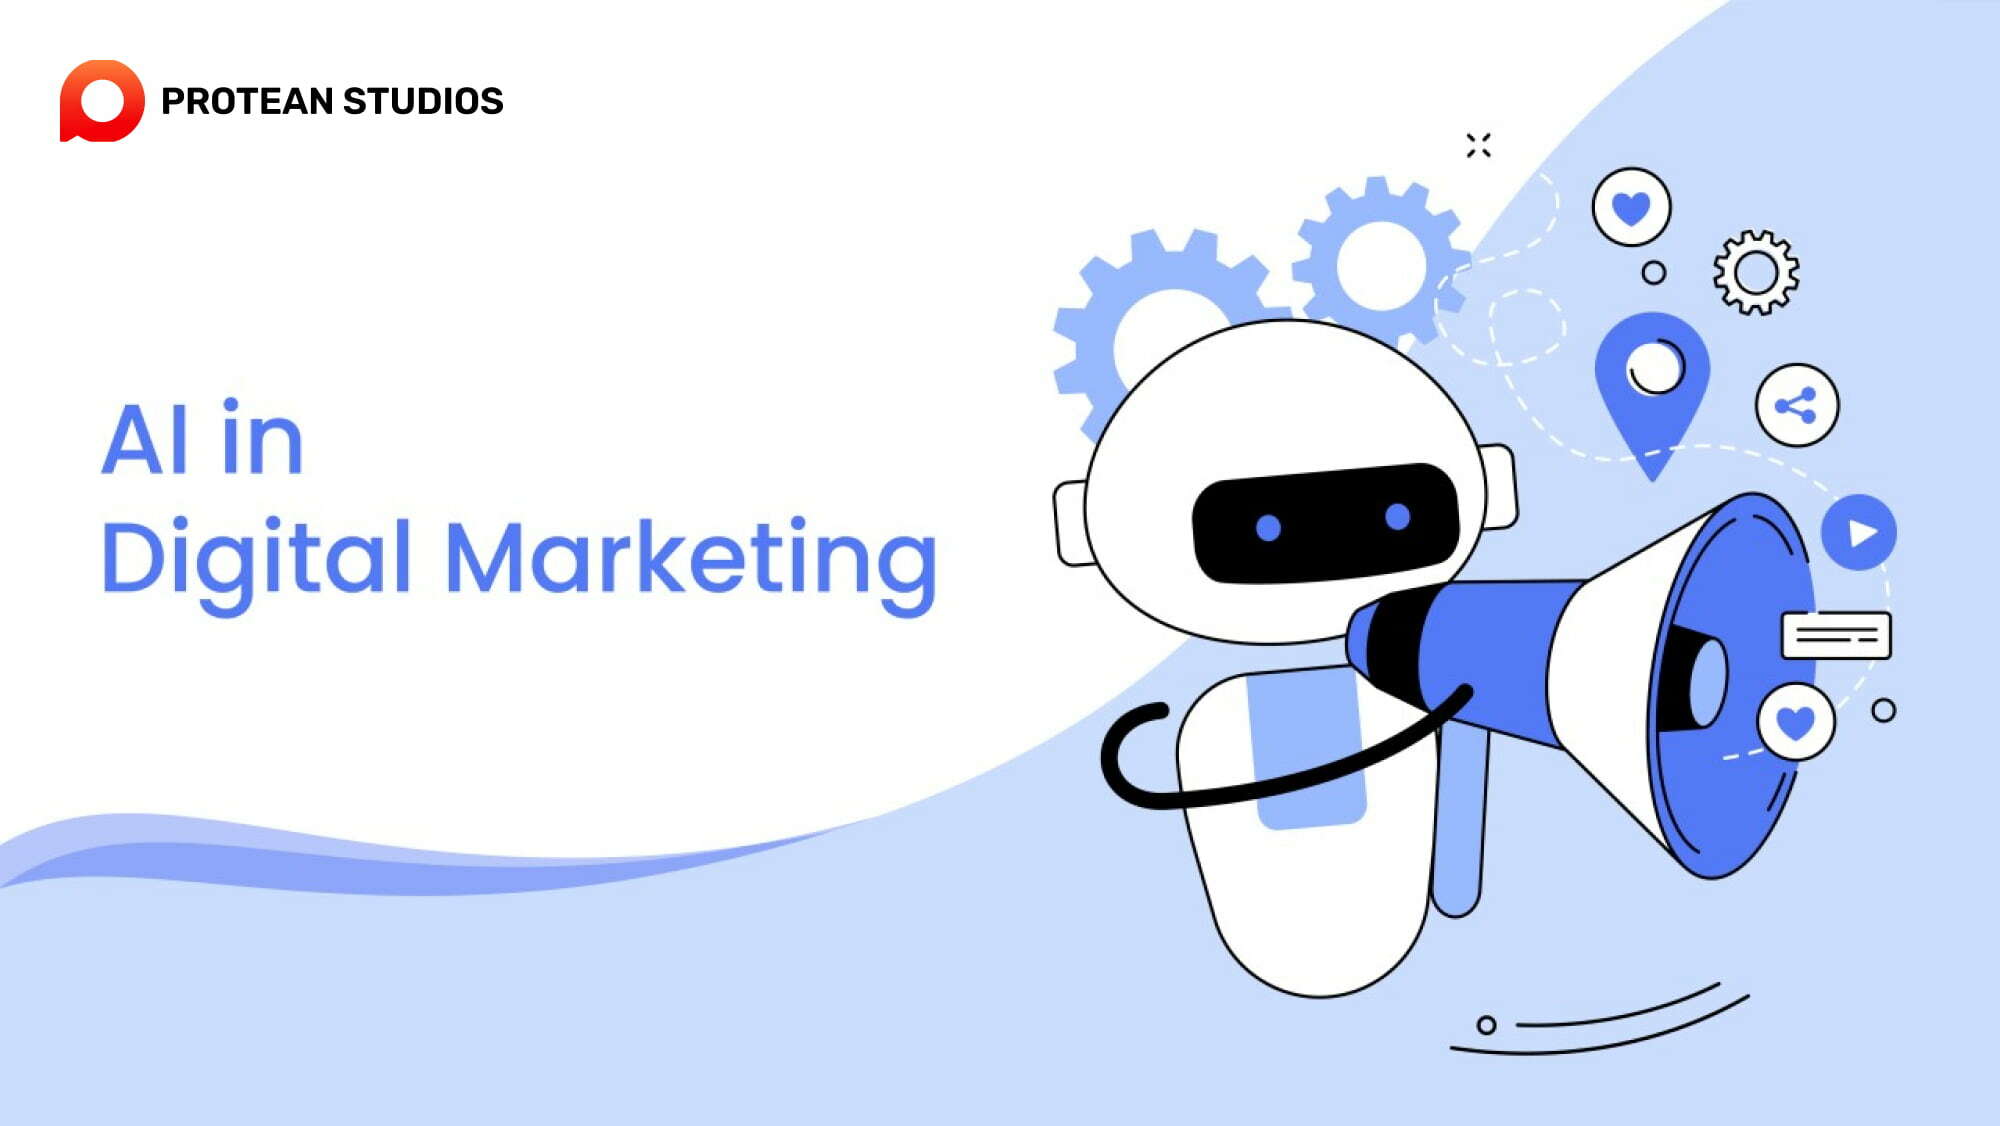 Using AI in digital marketing to enhance marketing efficiency